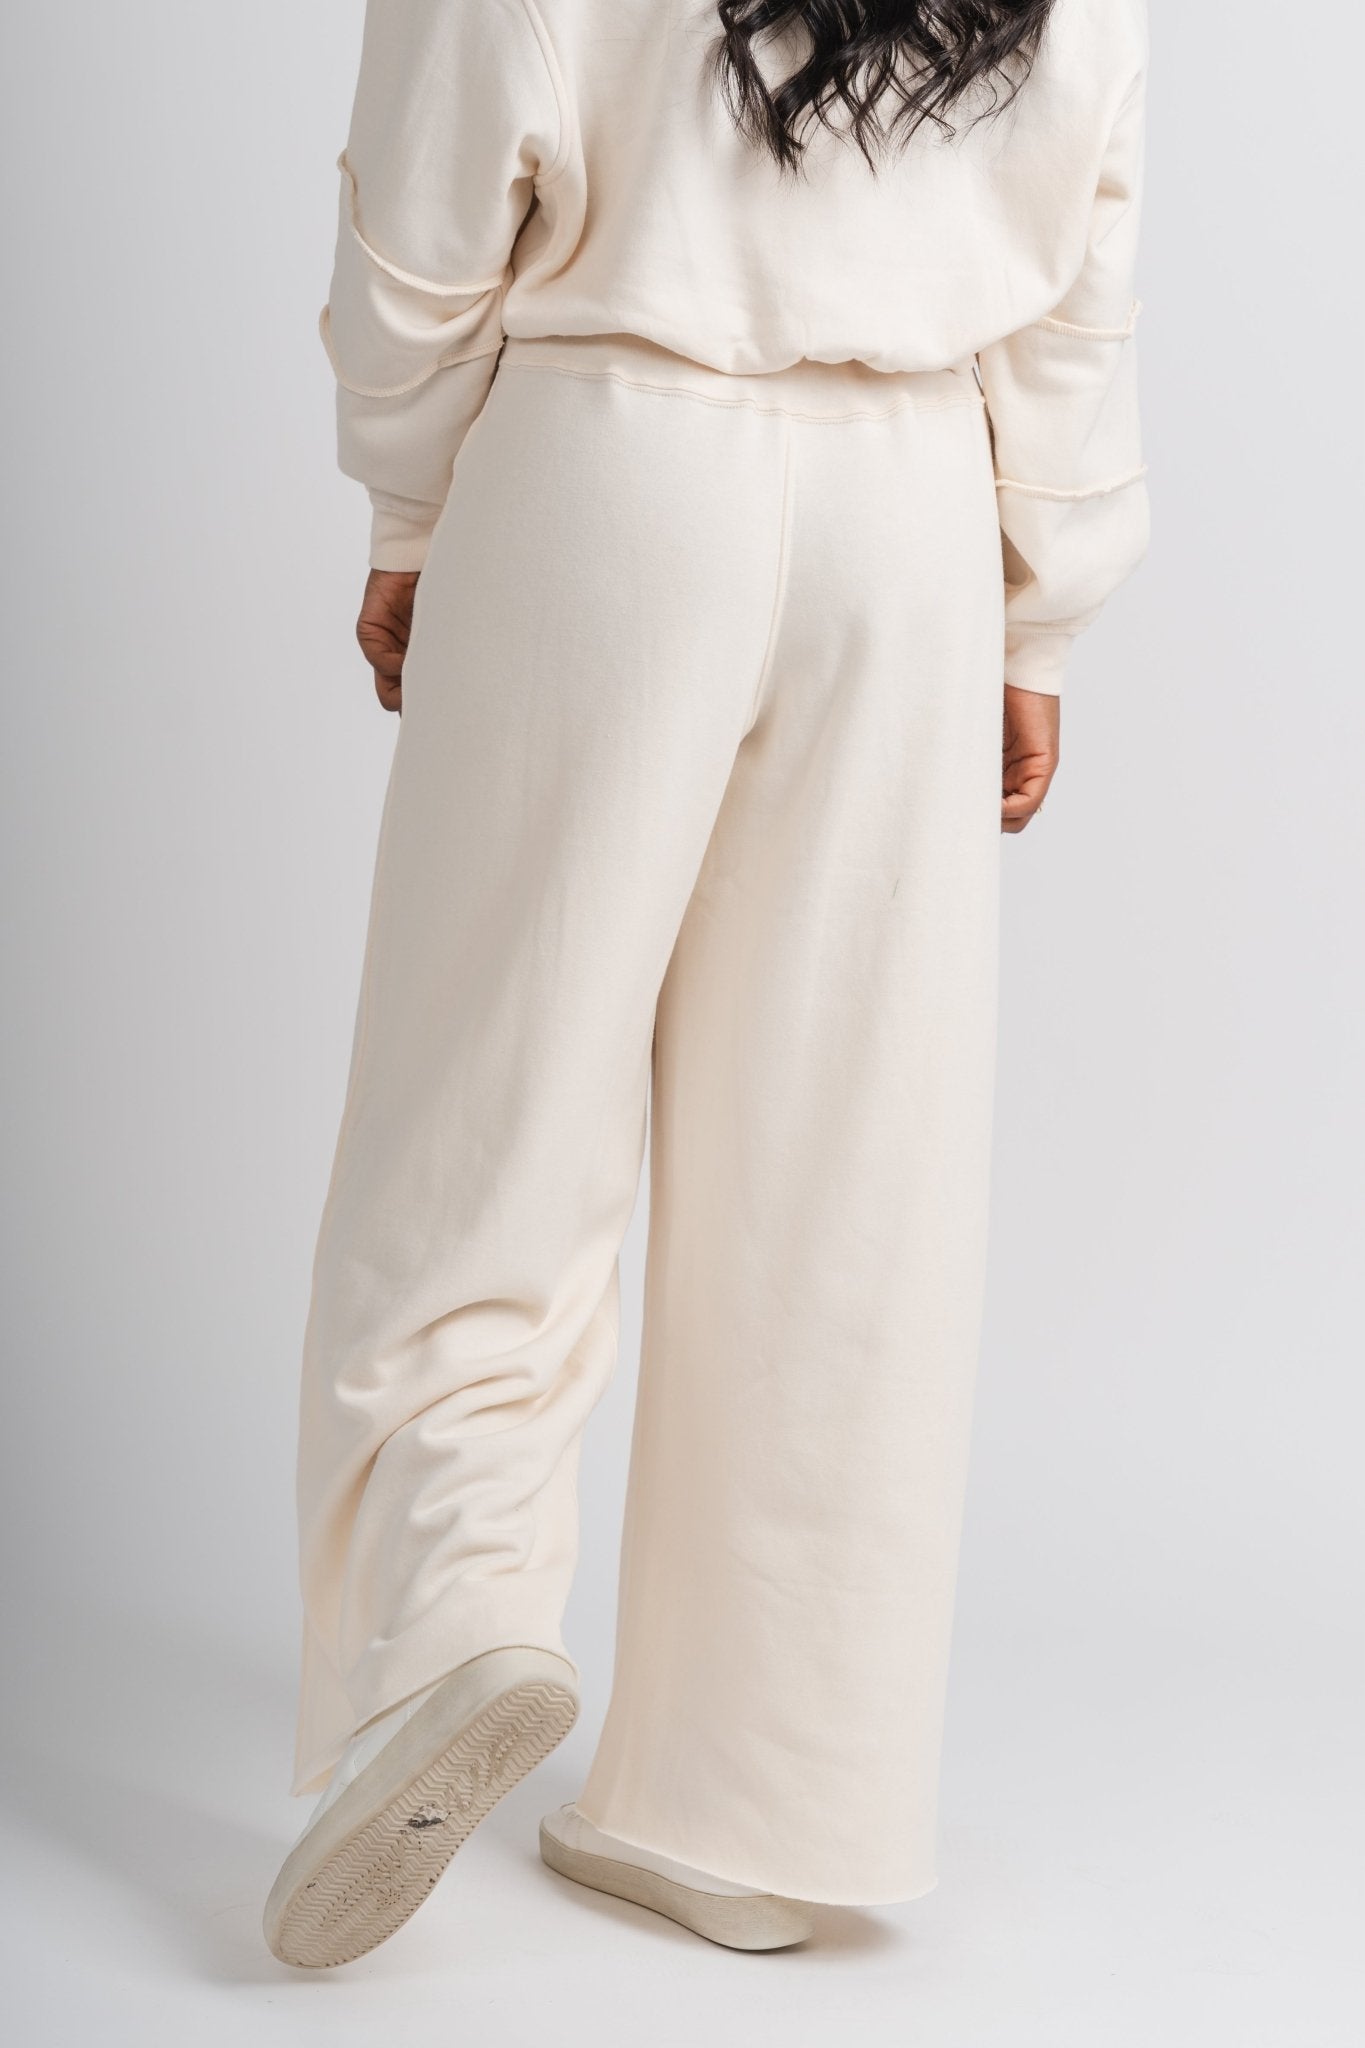 Wide leg sweatpants cream - Adorable sweatpants - Stylish Comfortable Outfits at Lush Fashion Lounge Boutique in OKC